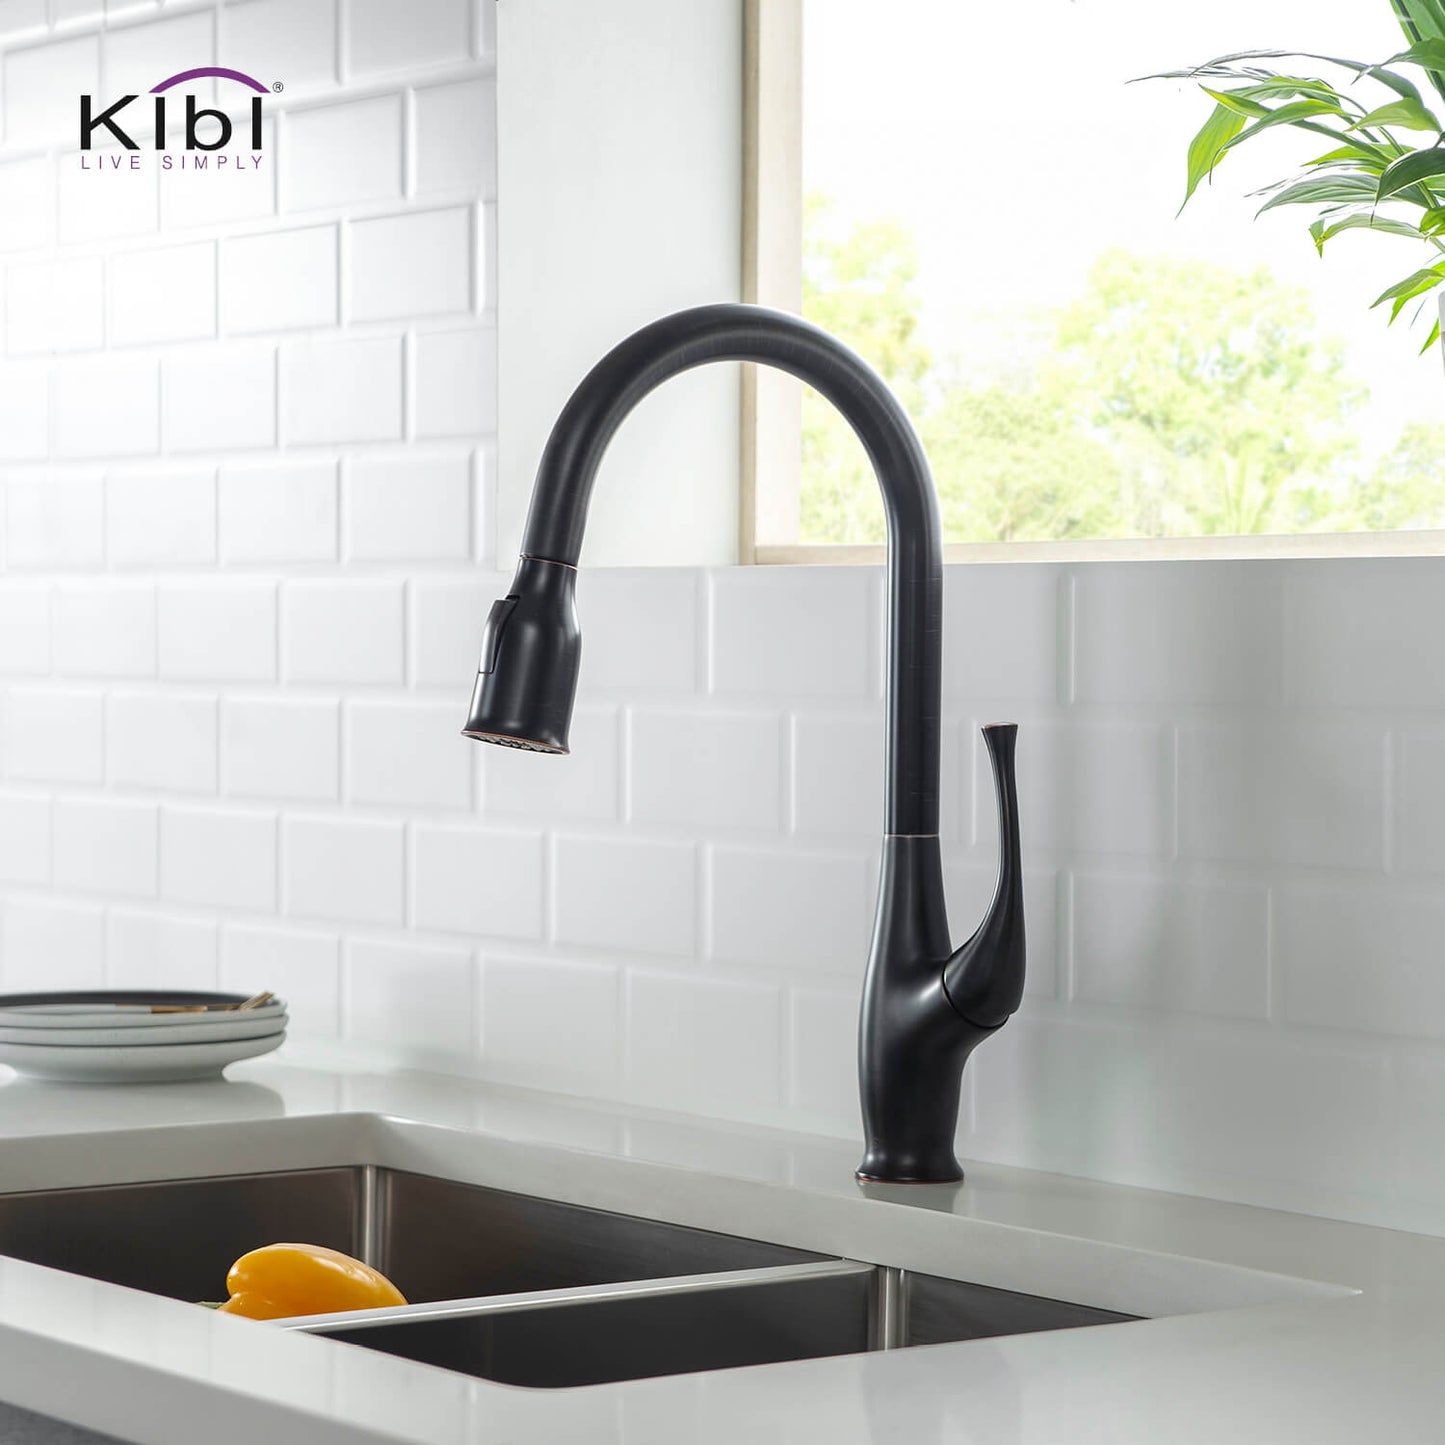 Kibi Cedar Single Handle High Arc Pull Down Kitchen Faucet With Soap Dispenser in Oil Rubbed Bronze Finish